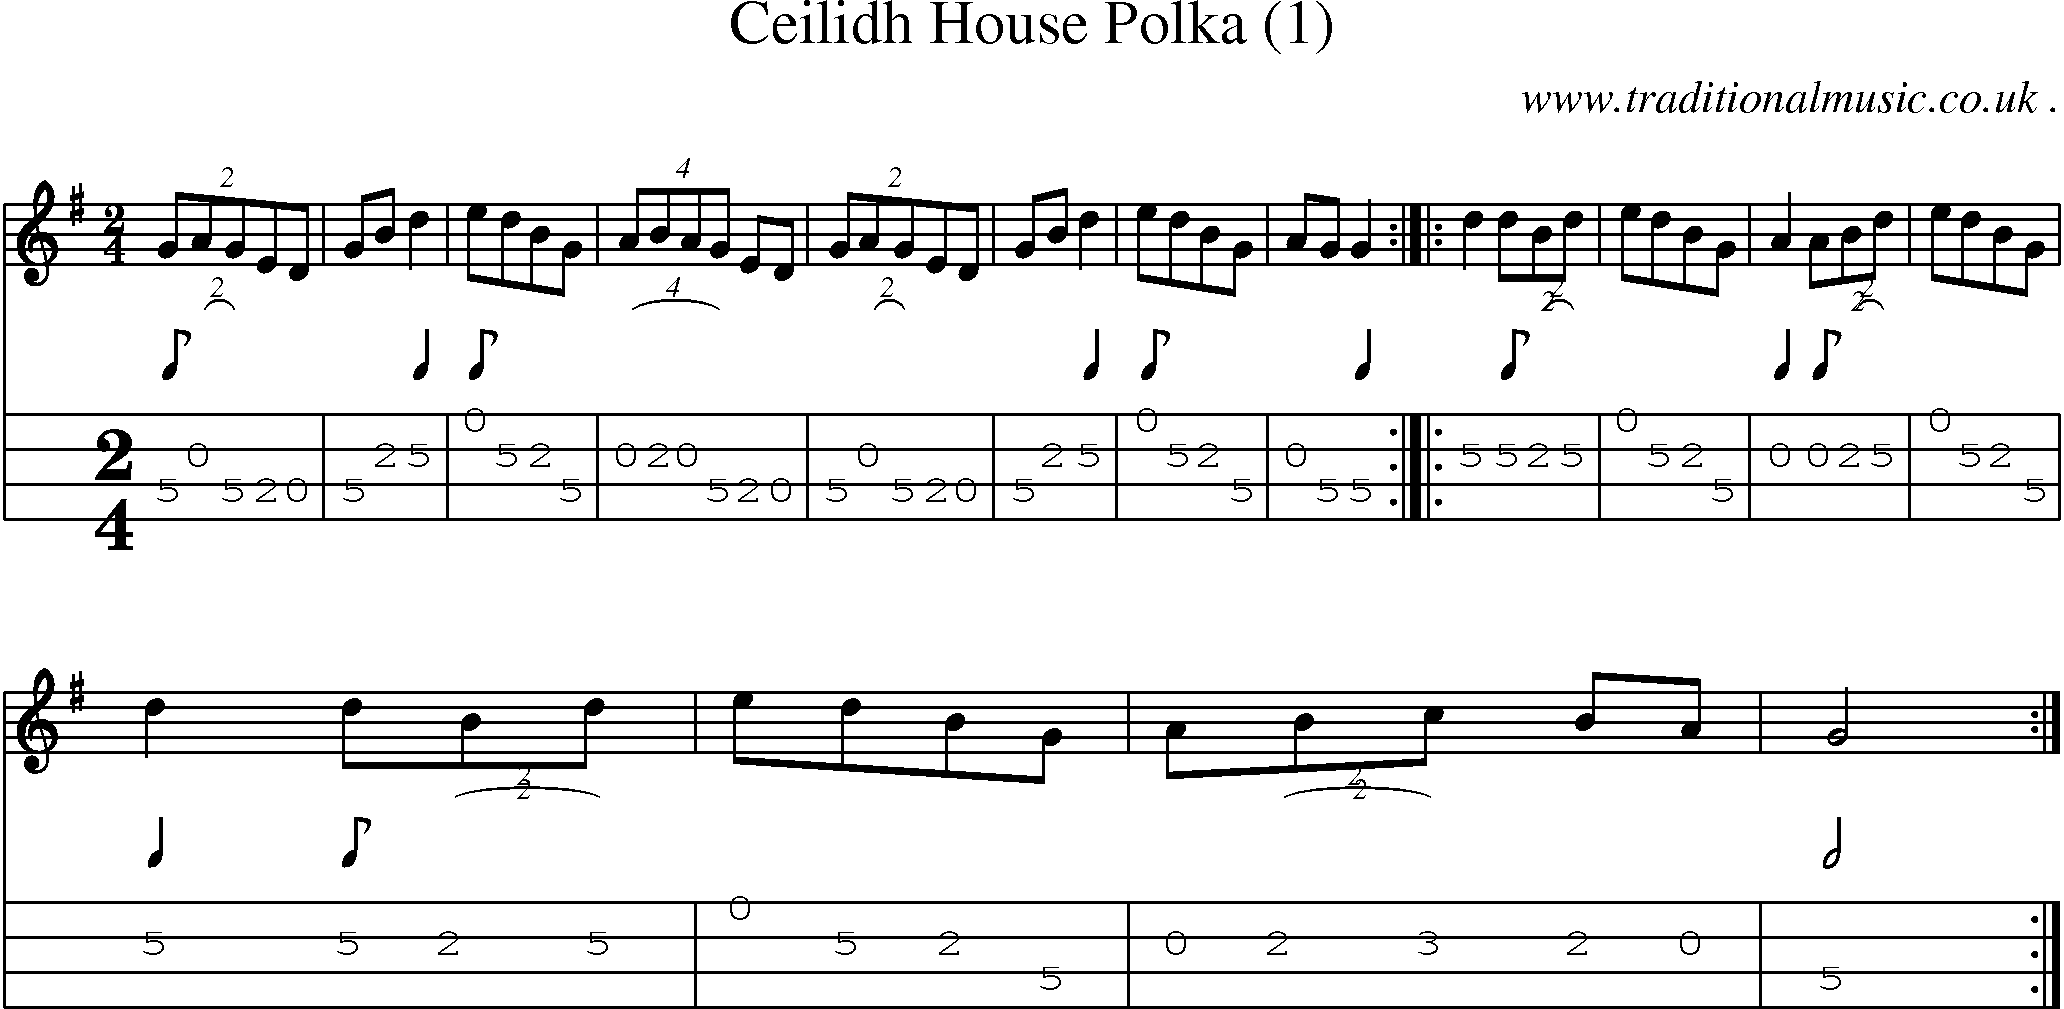 Sheet-Music and Mandolin Tabs for Ceilidh House Polka (1)